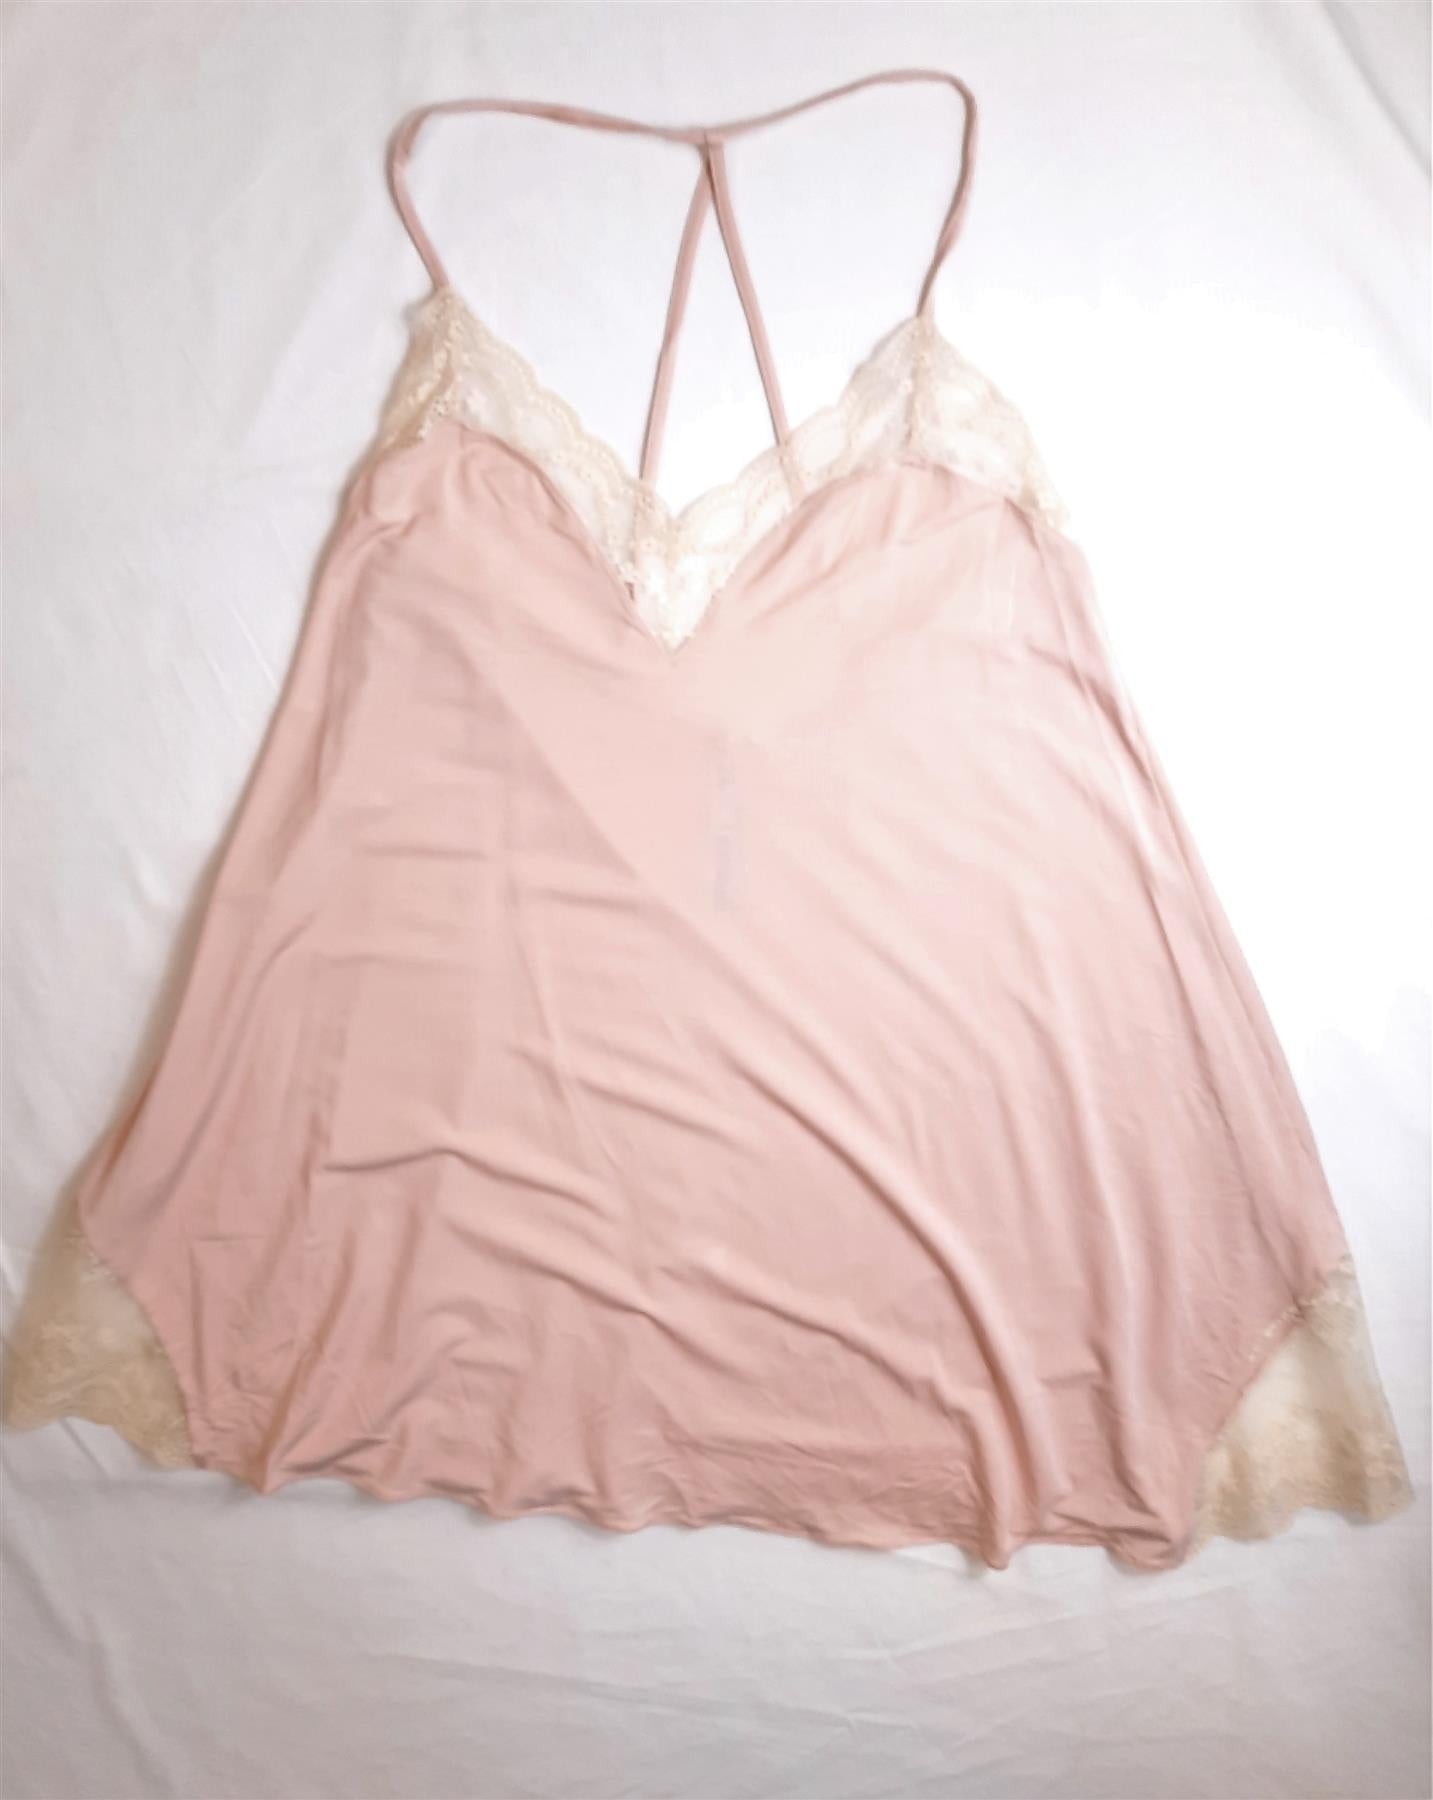 Women's Nightdress Supersoft Comfort Pink Lace Pyjama Nightie Size 14-16 New